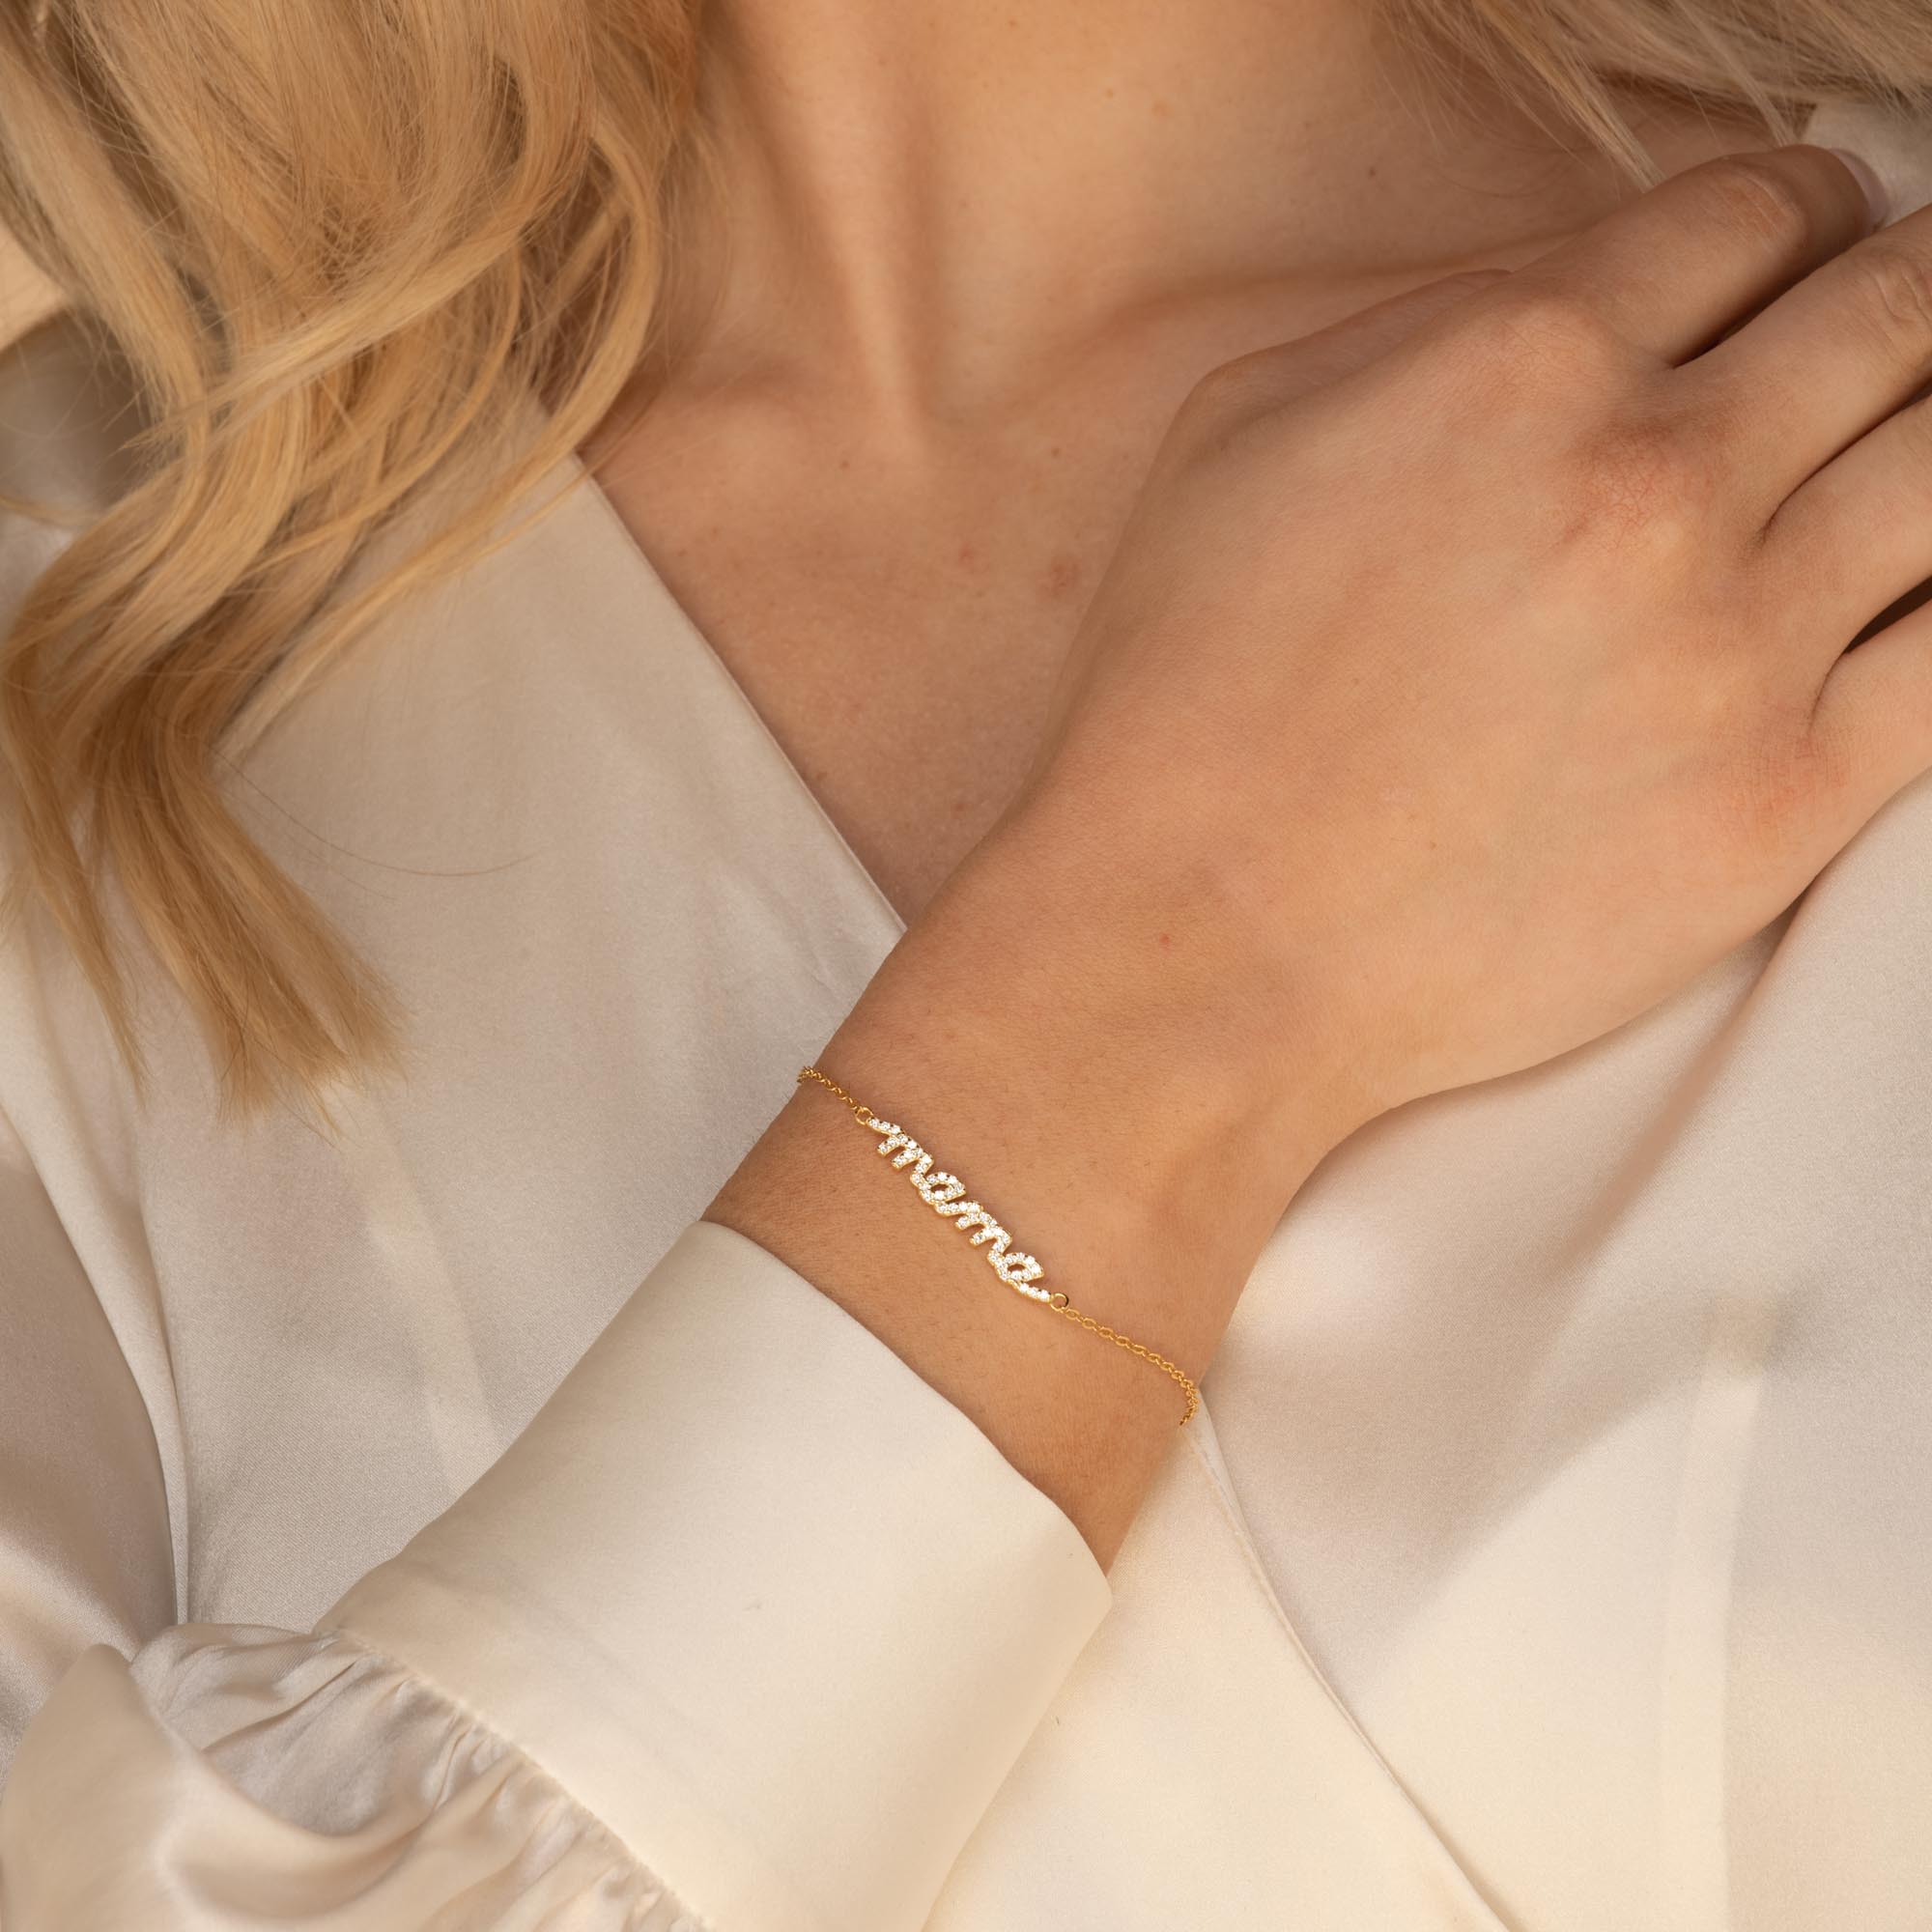 Mama Nameplate Sapphire Bracelet Gold